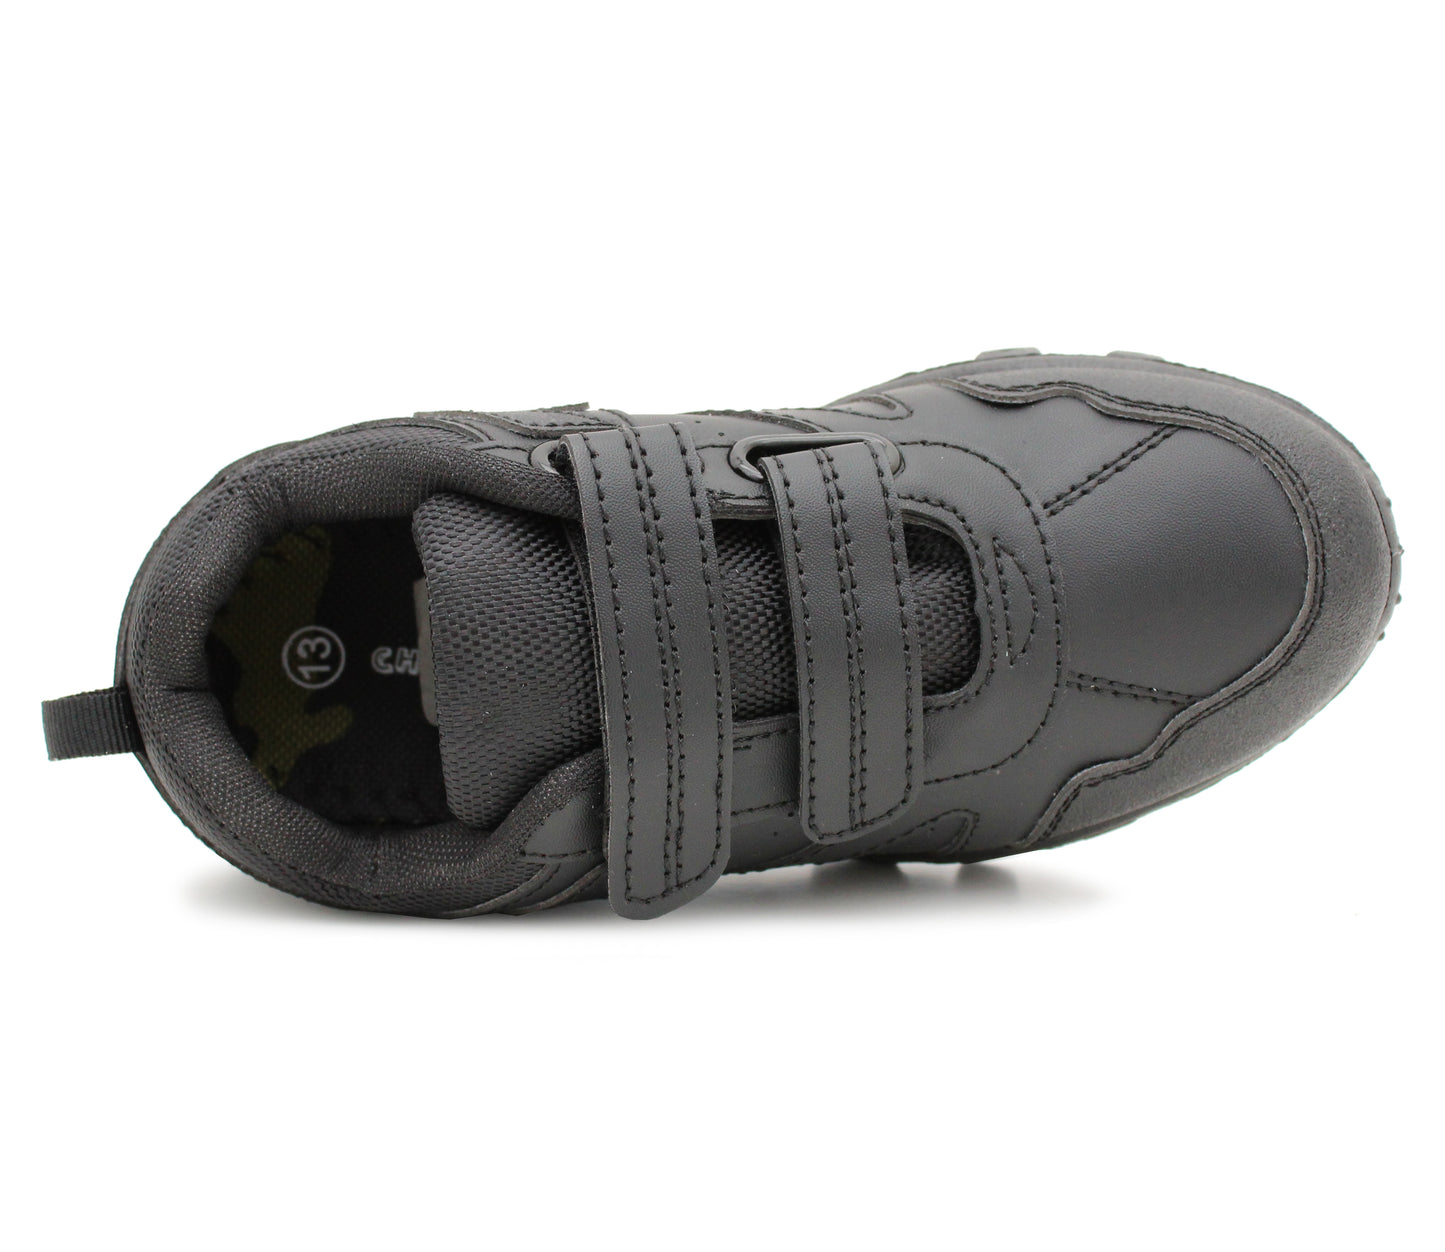 BOLT Boys Kids Black School Shoes Trainers Touch Fasten Casual Uniform Sneaker Pumps